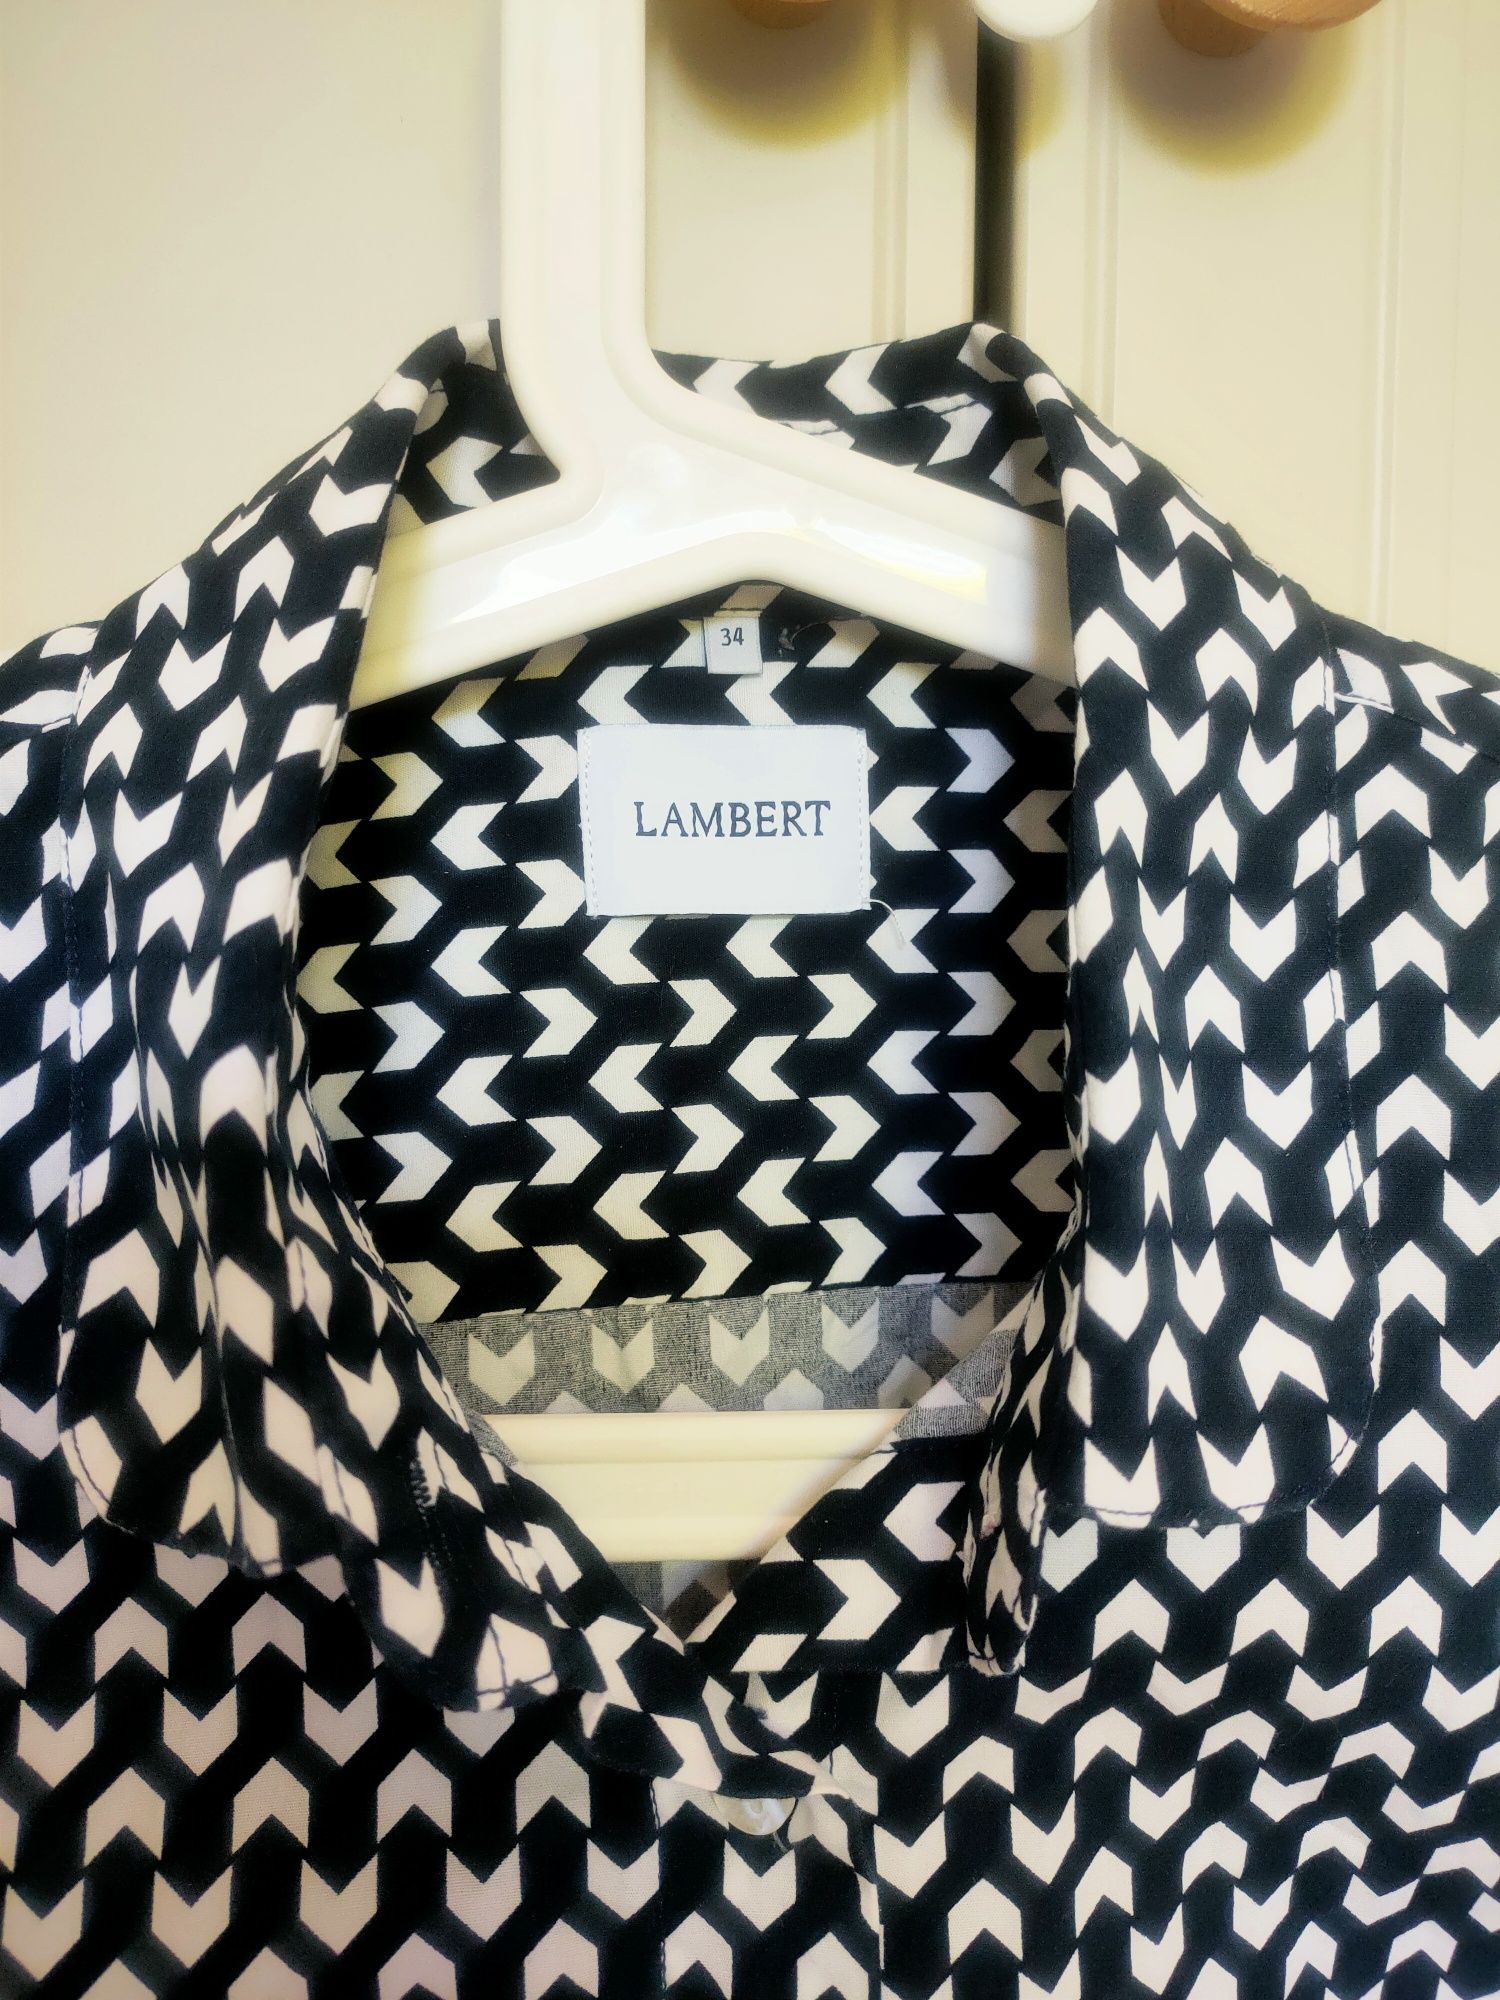 Wólczanka Lambert koszula damska taliowana r.34